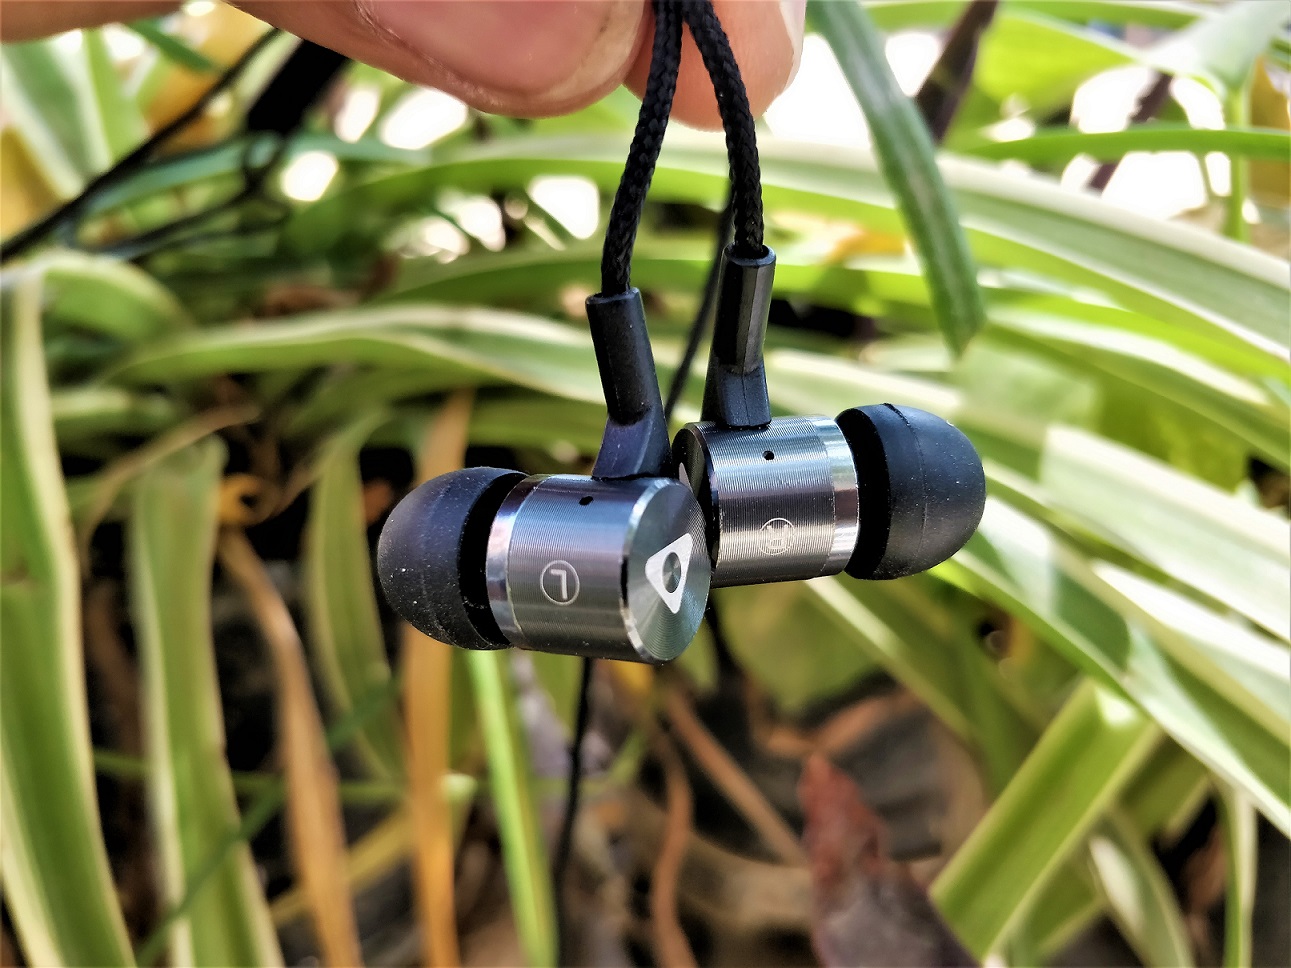 Stuffcool Bac in-Ear Wired Earphones Headphone Review 2